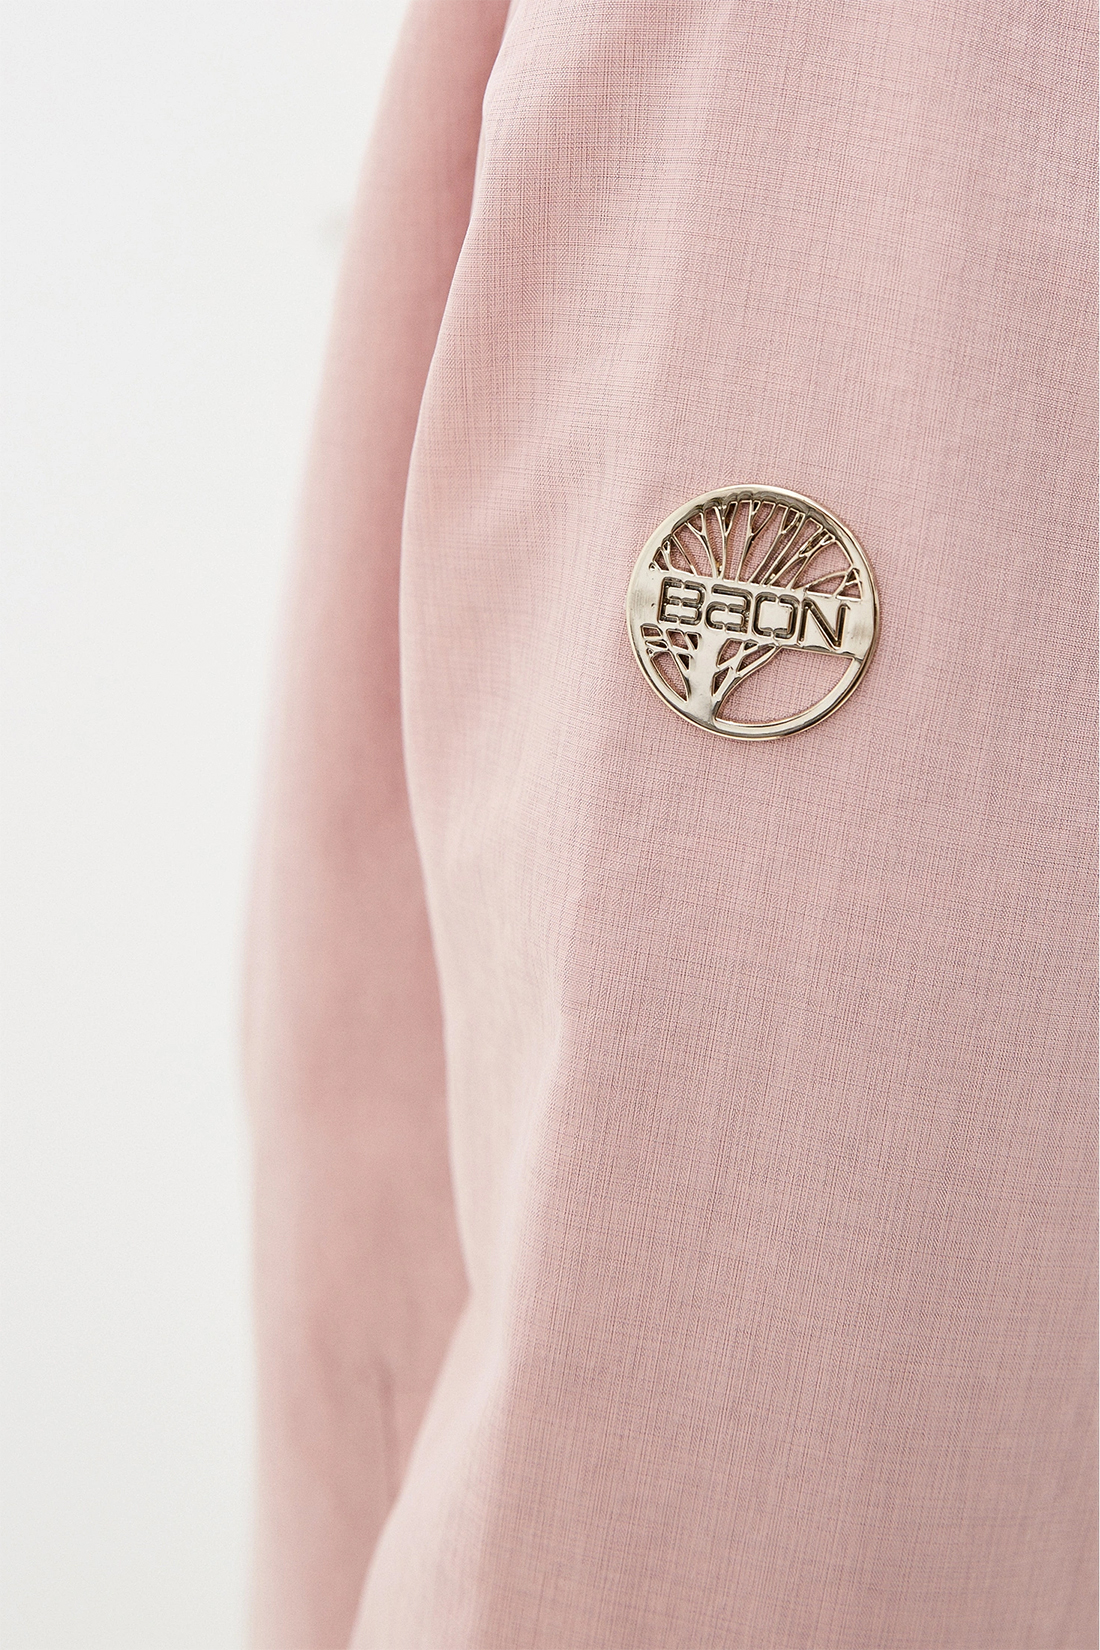 Ветровка на кнопках (арт. baon B100025), размер M, цвет розовый Ветровка на кнопках (арт. baon B100025) - фото 3